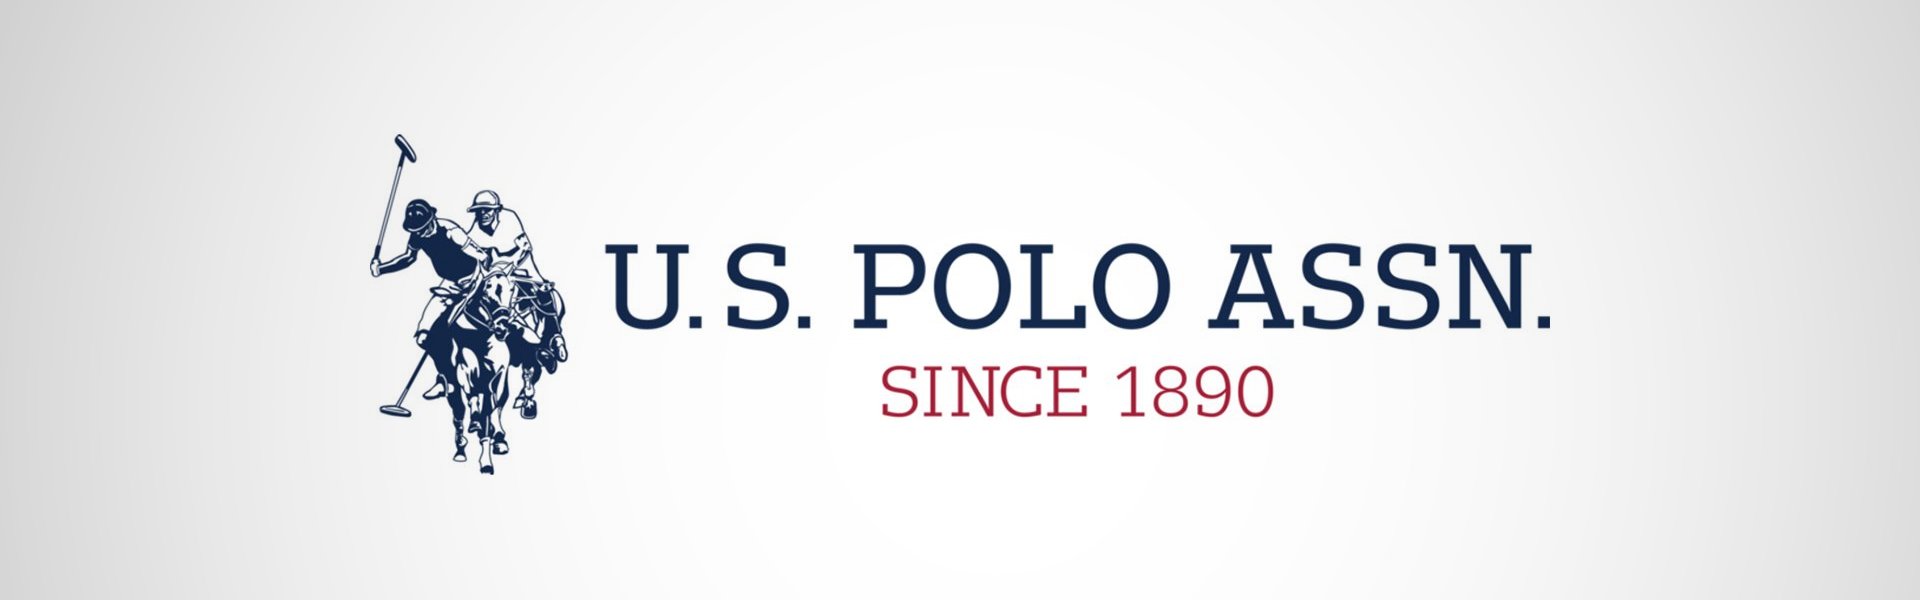 U.S. Polo miesten kengät Tabry, harmaa-musta U. S. Polo Assn.